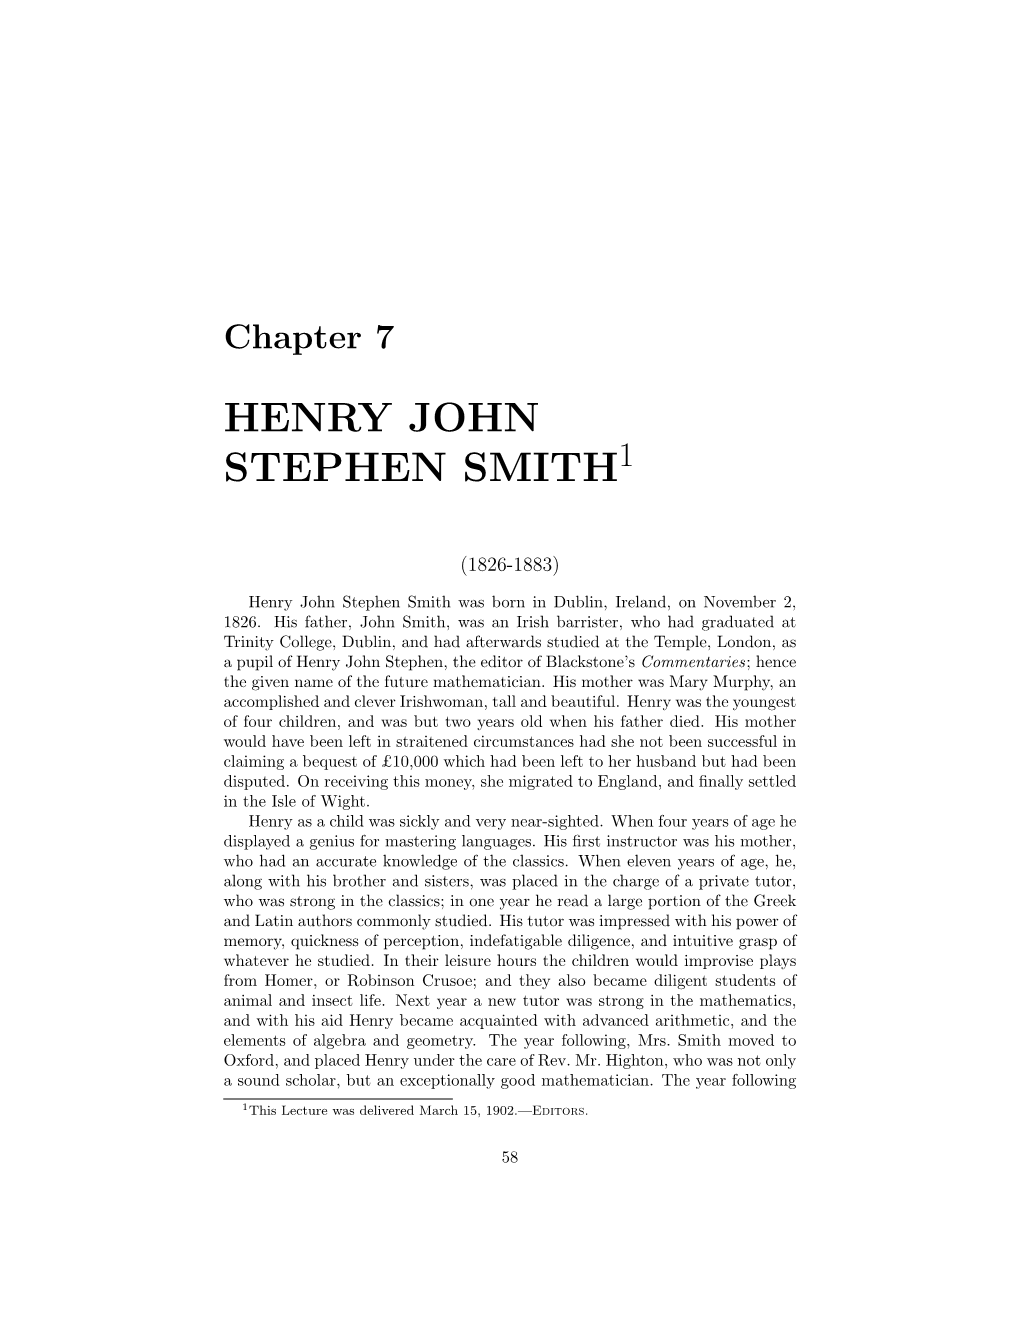 Henry John Stephen Smith1